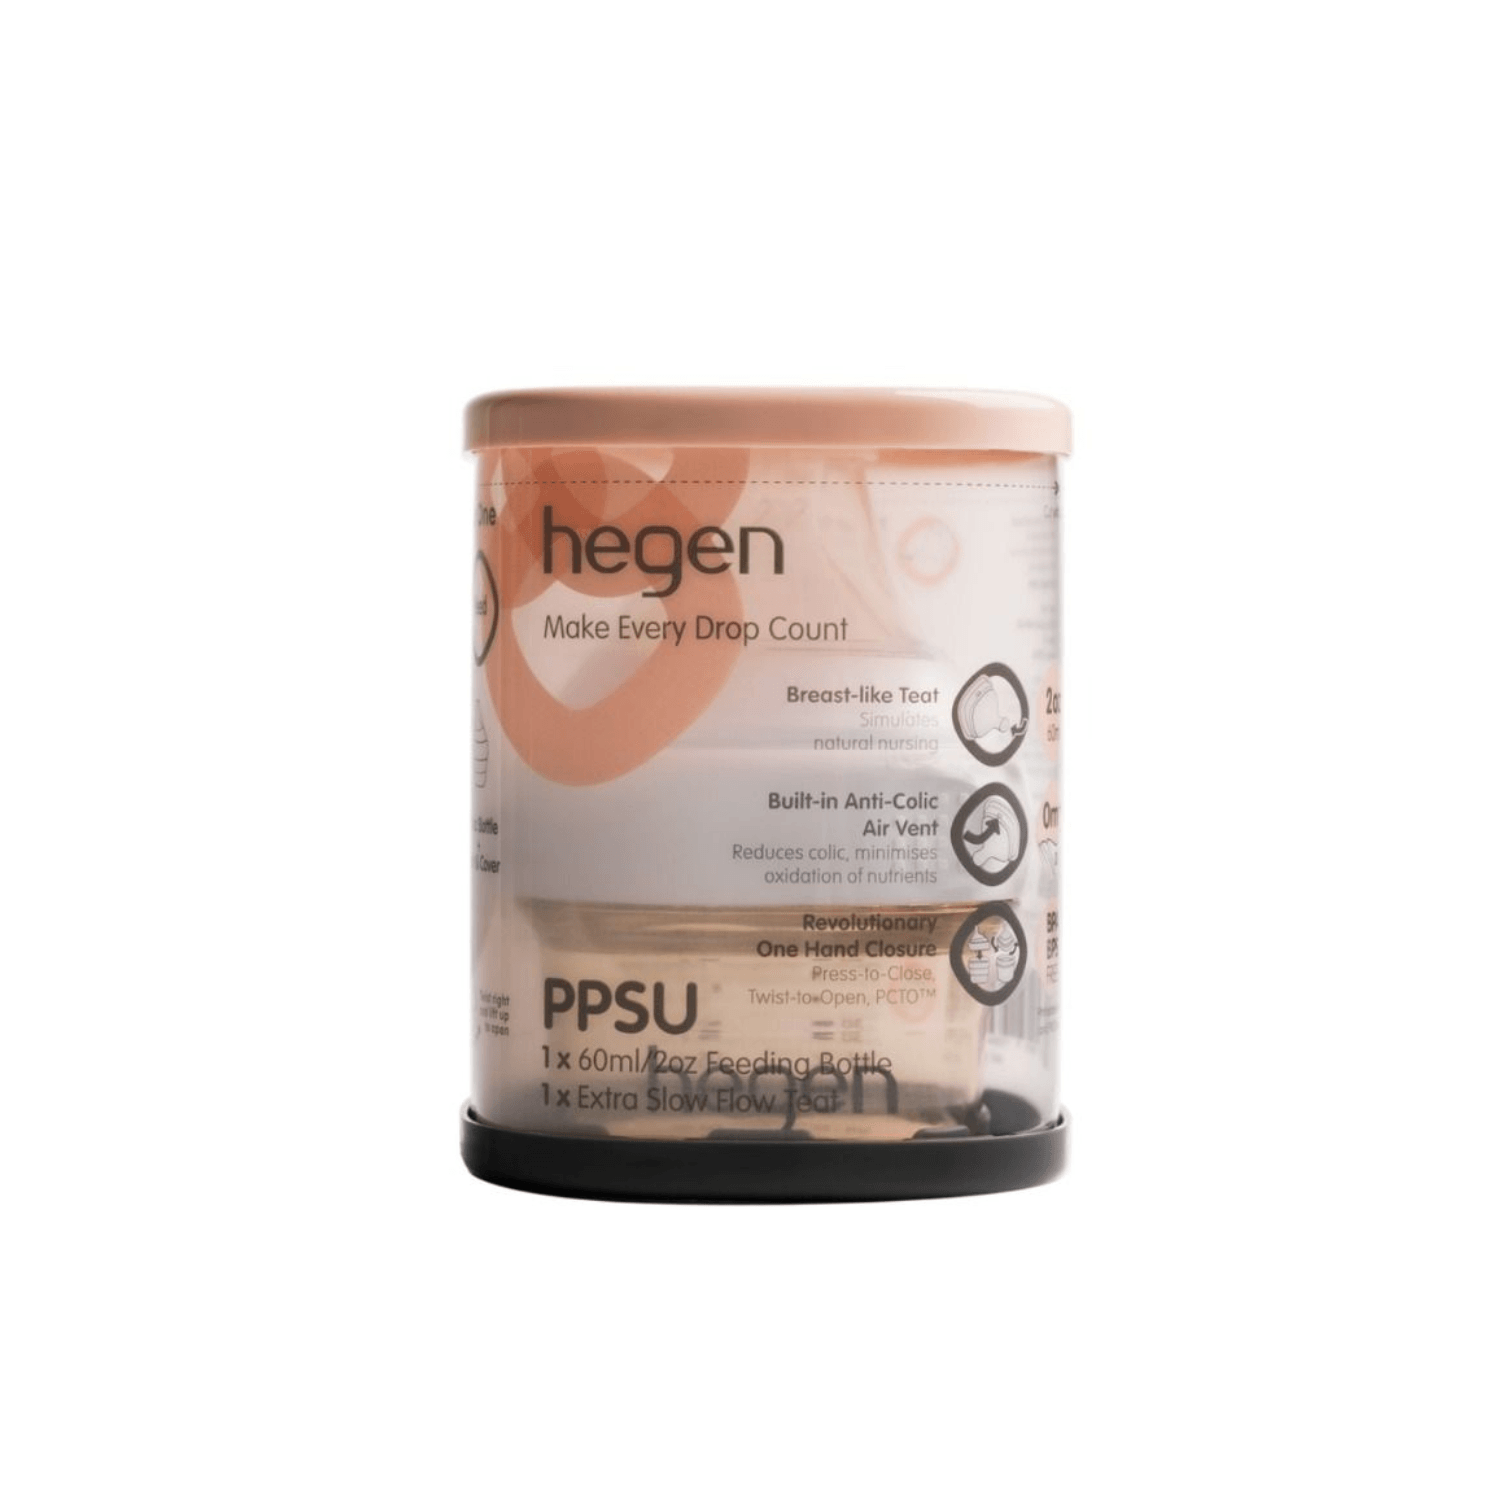 Hegen PCTO™ 60ml/2oz Feeding Bottle PPSU with Extra Slow Flow Teat (0 months)